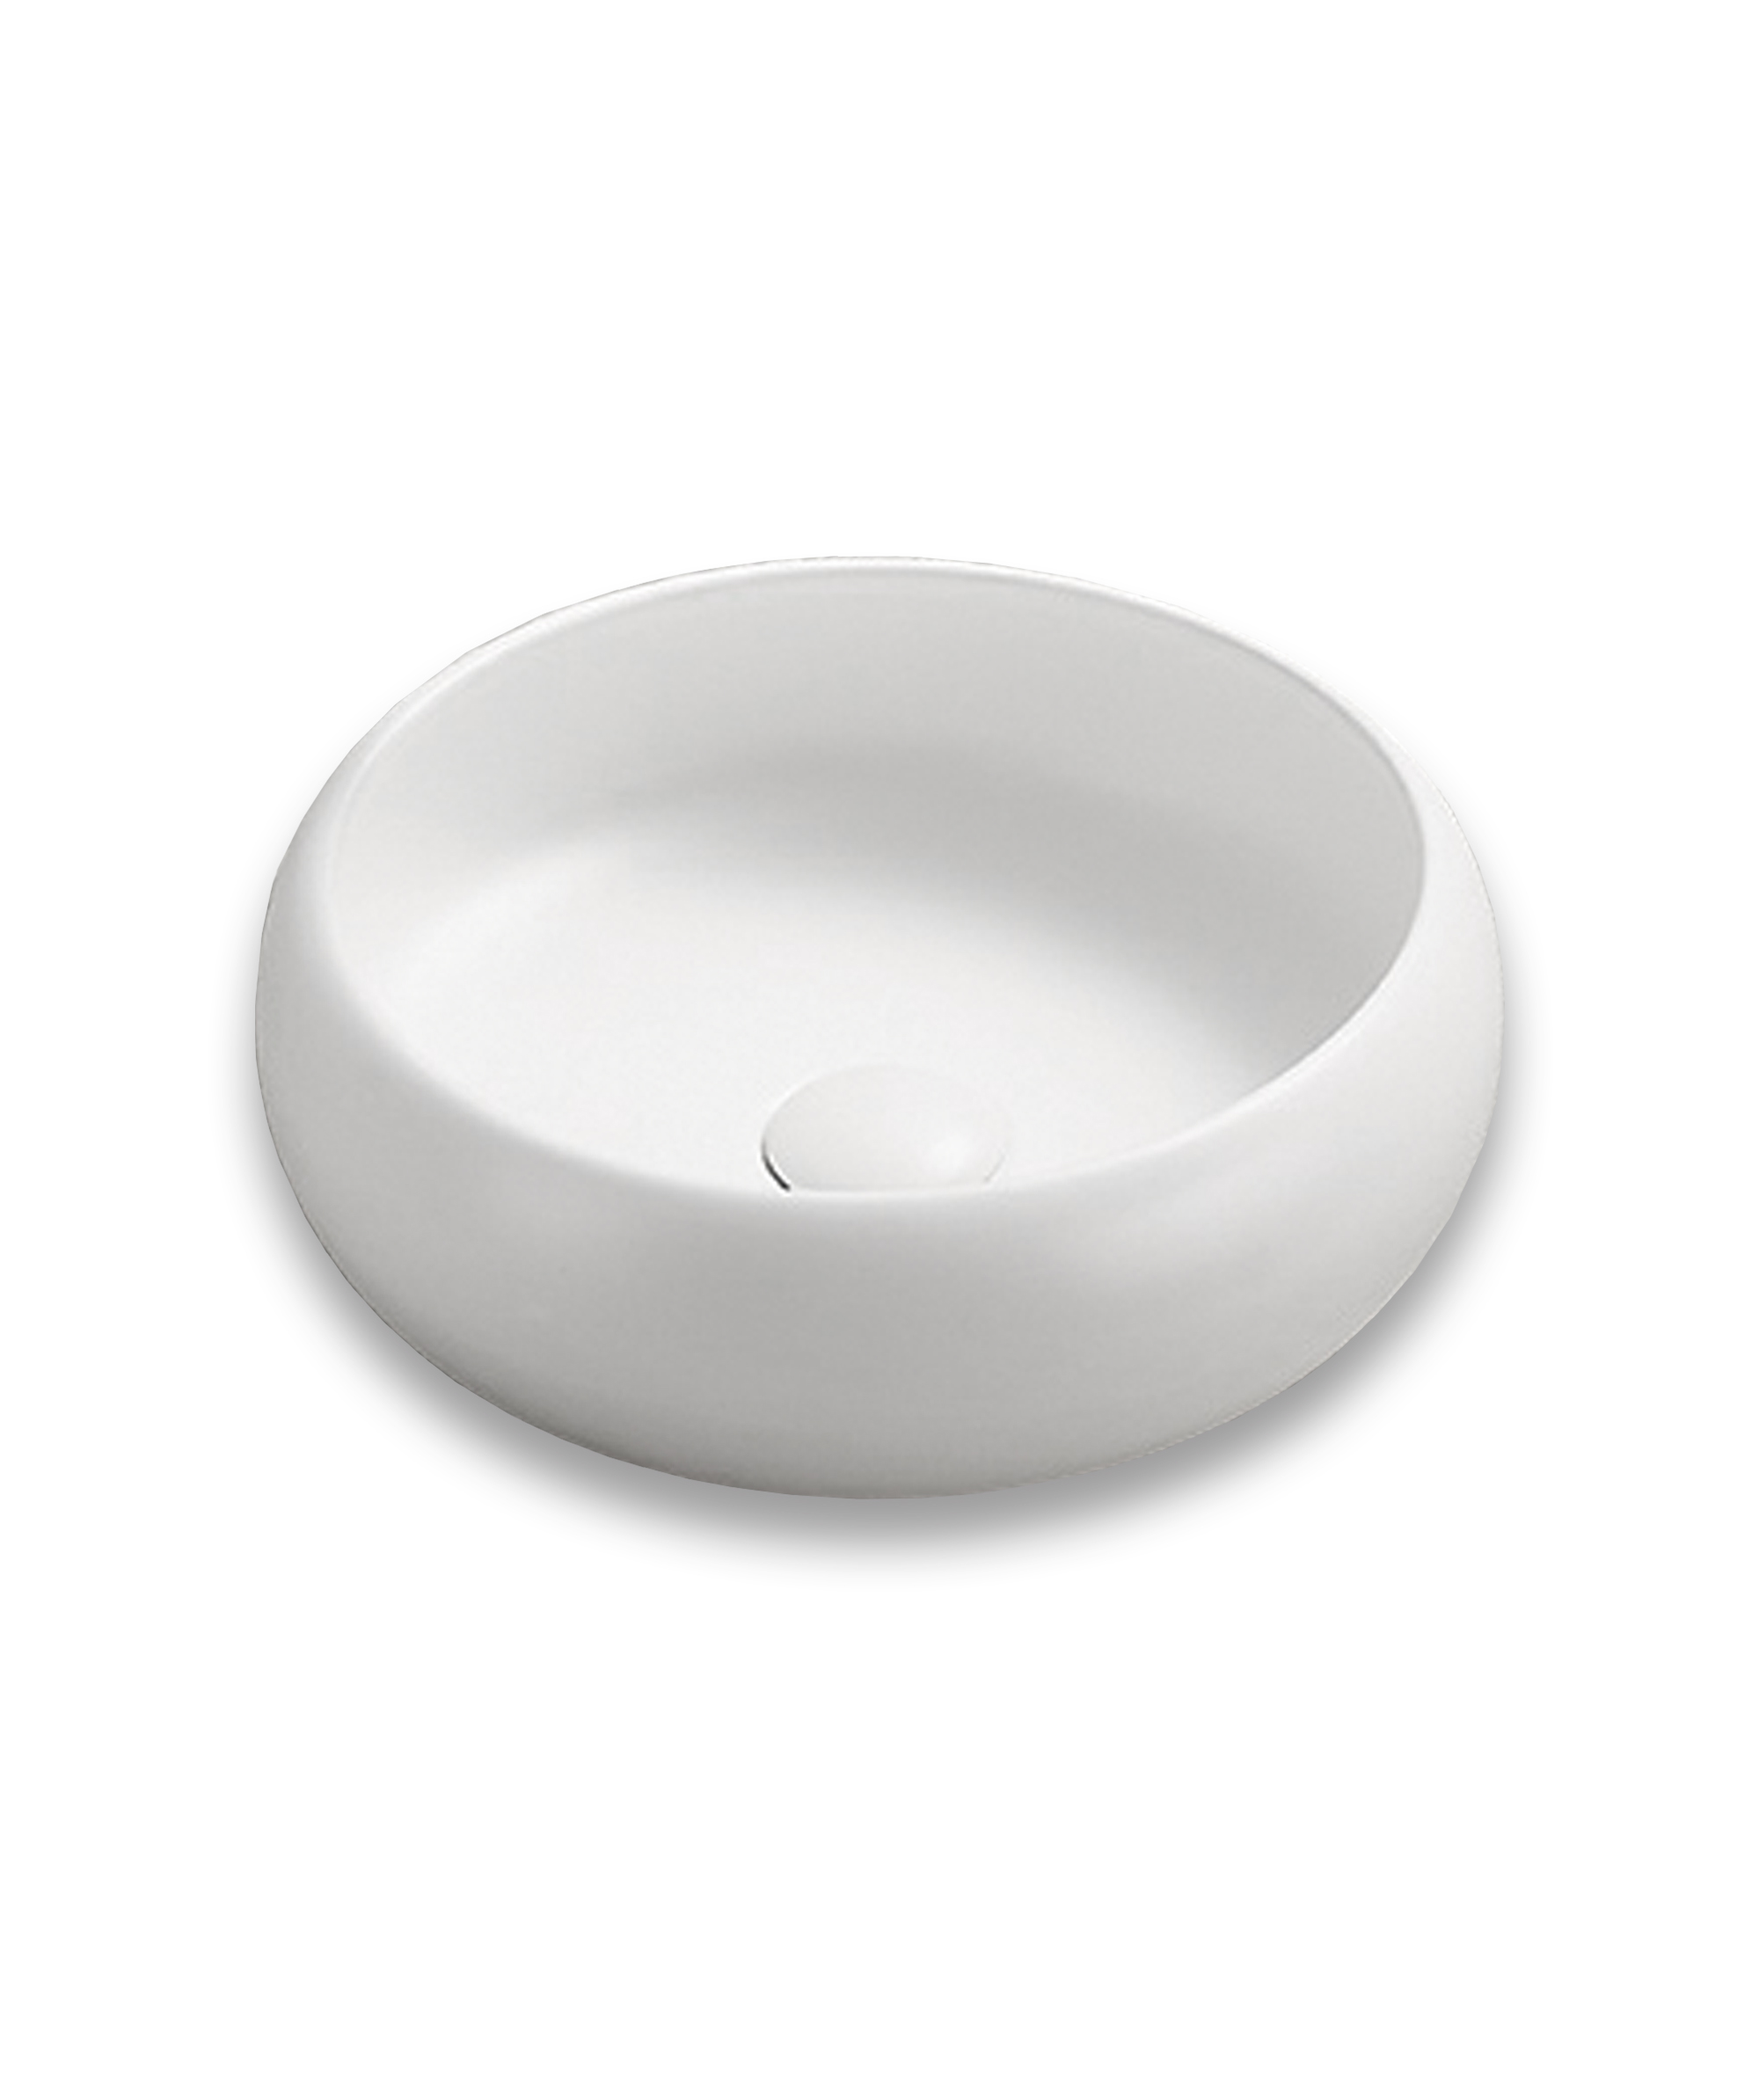 Arko 361 ceramic basin - White Silk Matte